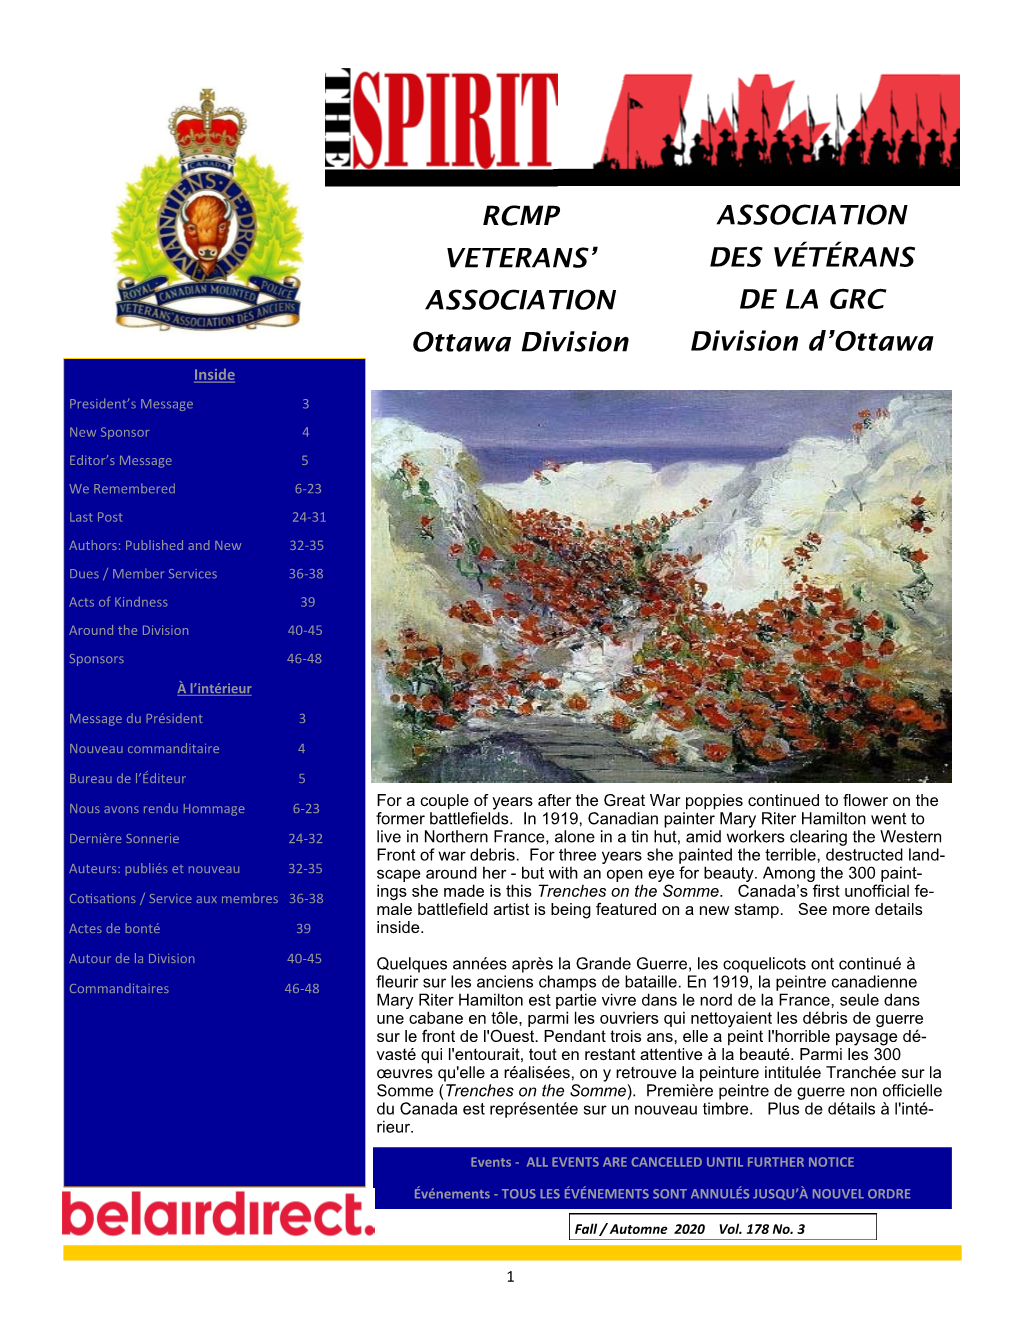 RCMP VETERANS' ASSOCIATION Ottawa Division ASSOCIATION